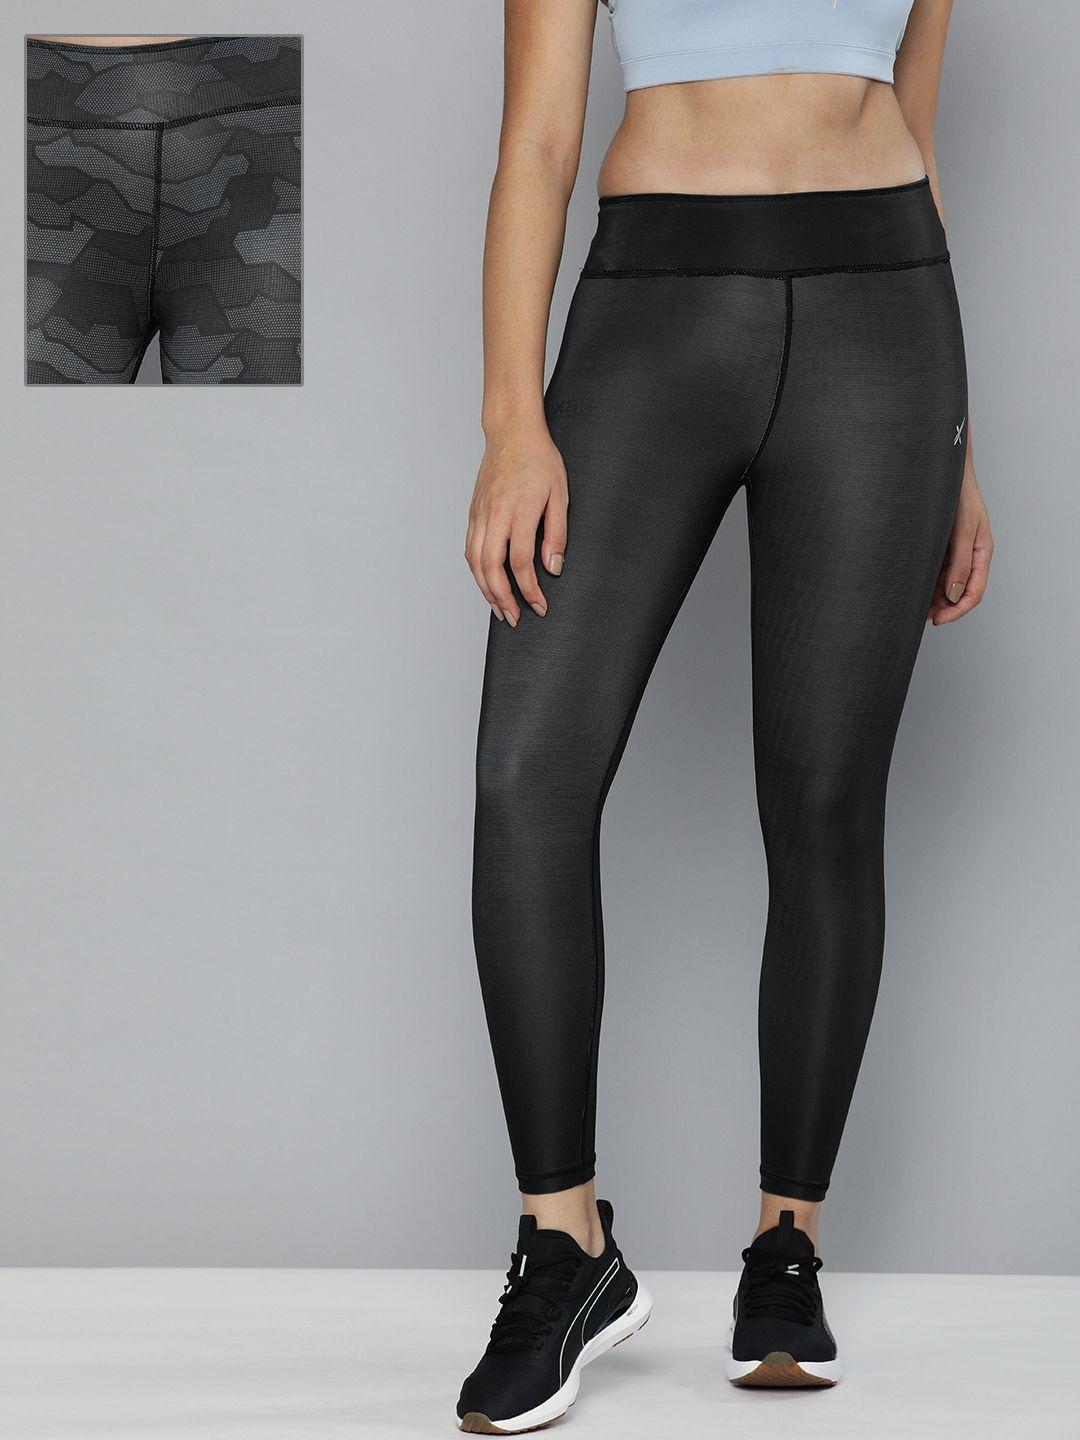 hrx by hrithik roshan women black camouflage designer to comment reversible running tights